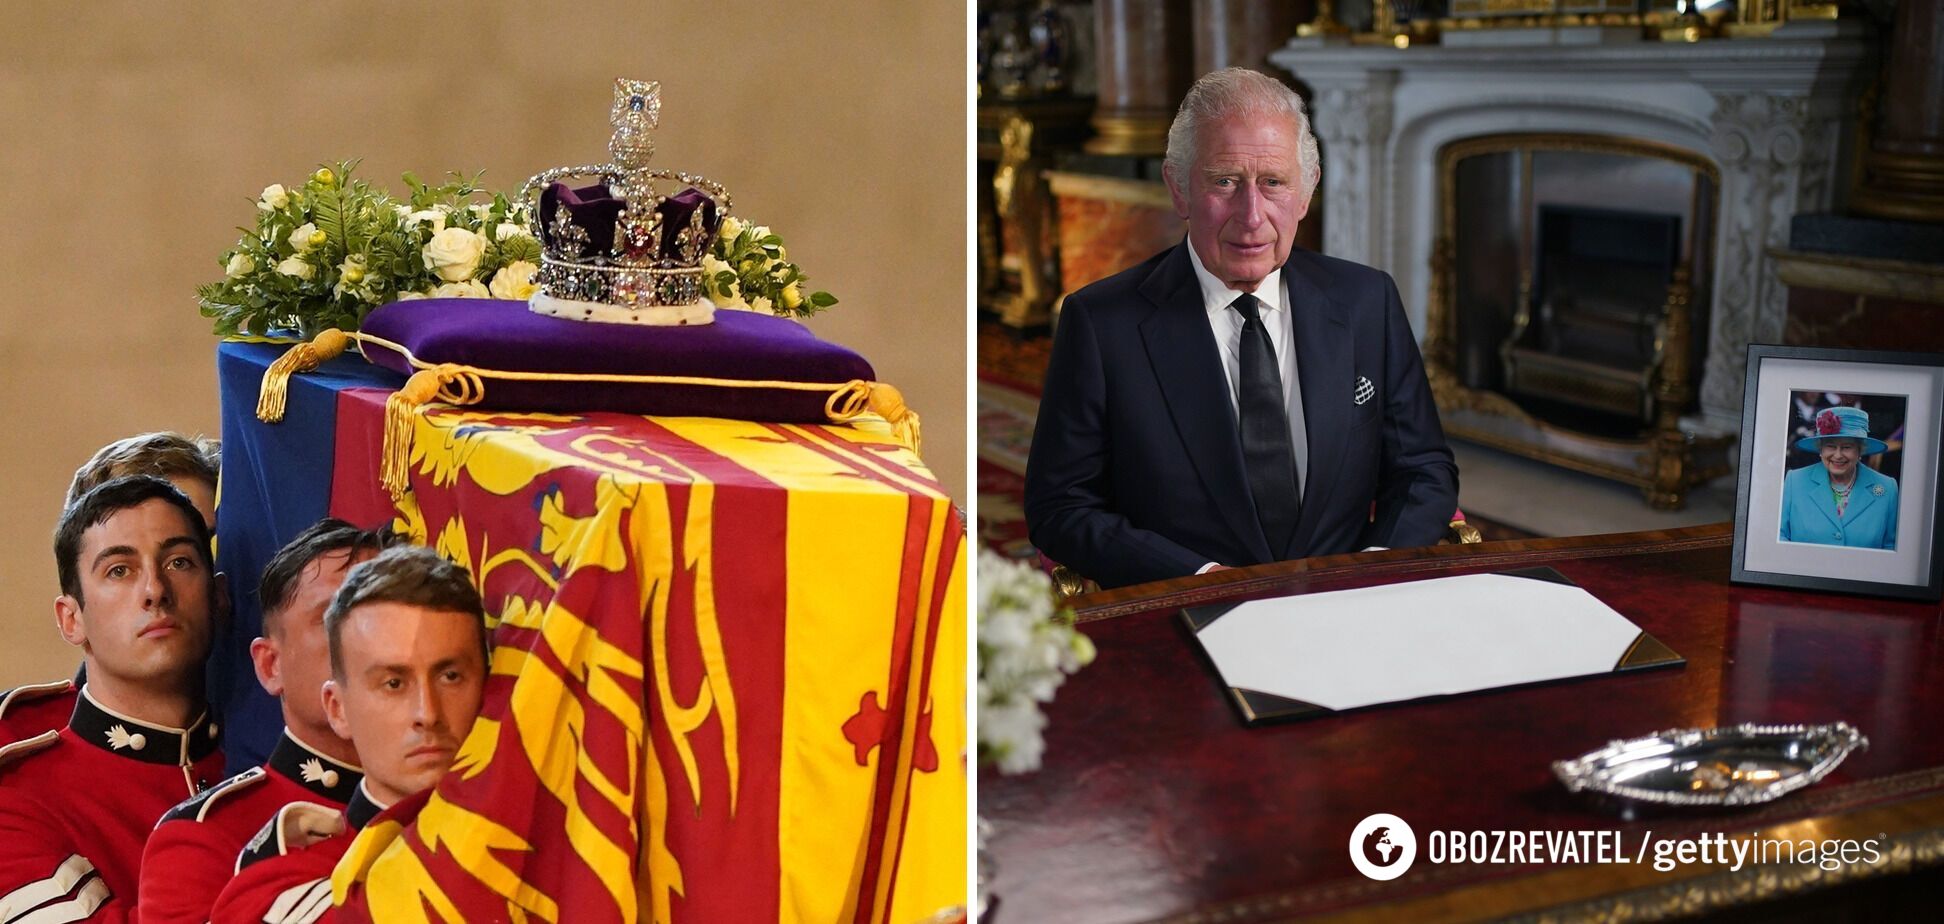 Princess Anne has revealed Queen Elizabeth II's biggest fear before her death